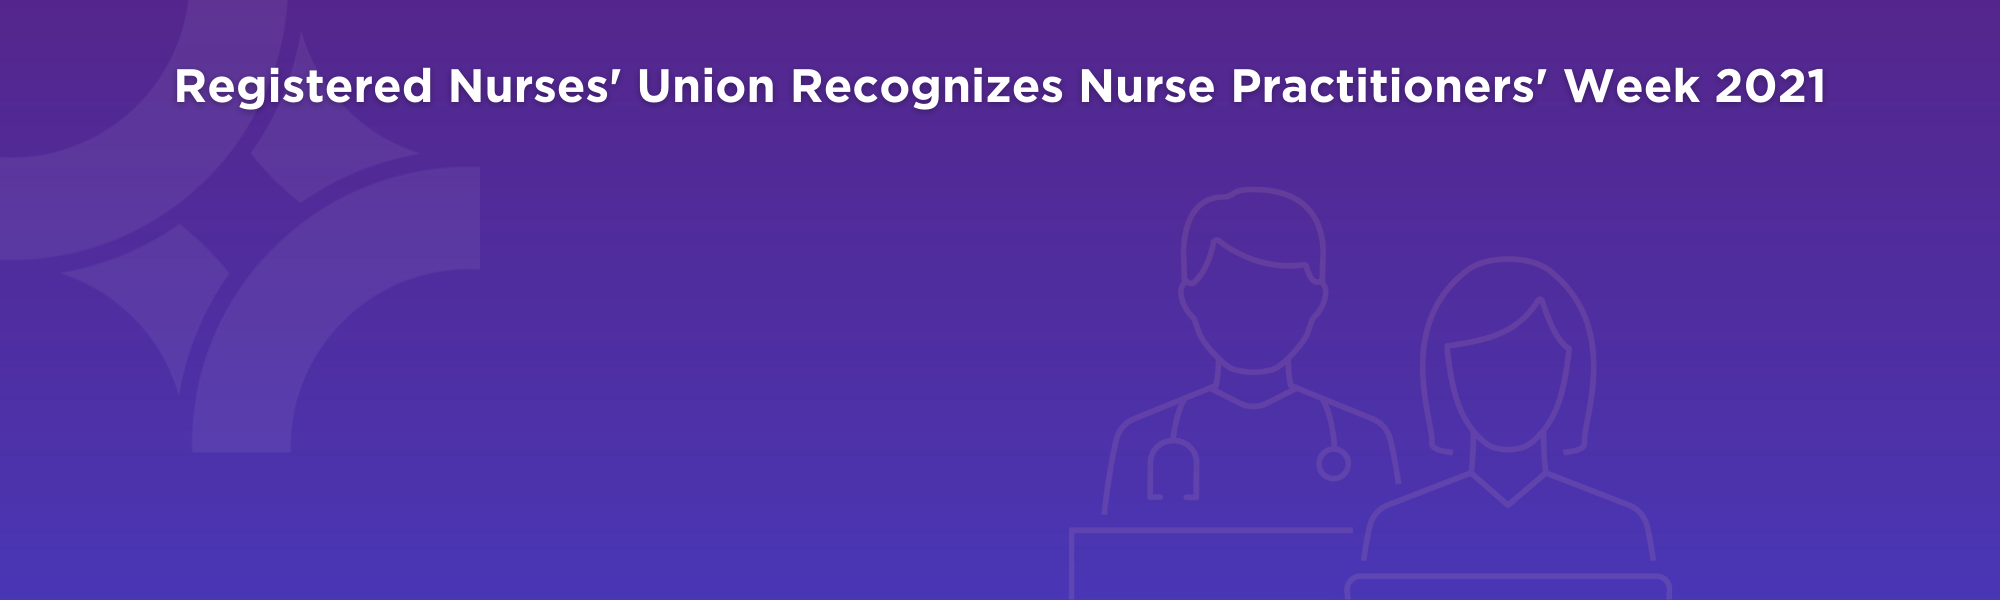 Registered Nurses’ Union Recognizes Nurse Practitioner Week 2021